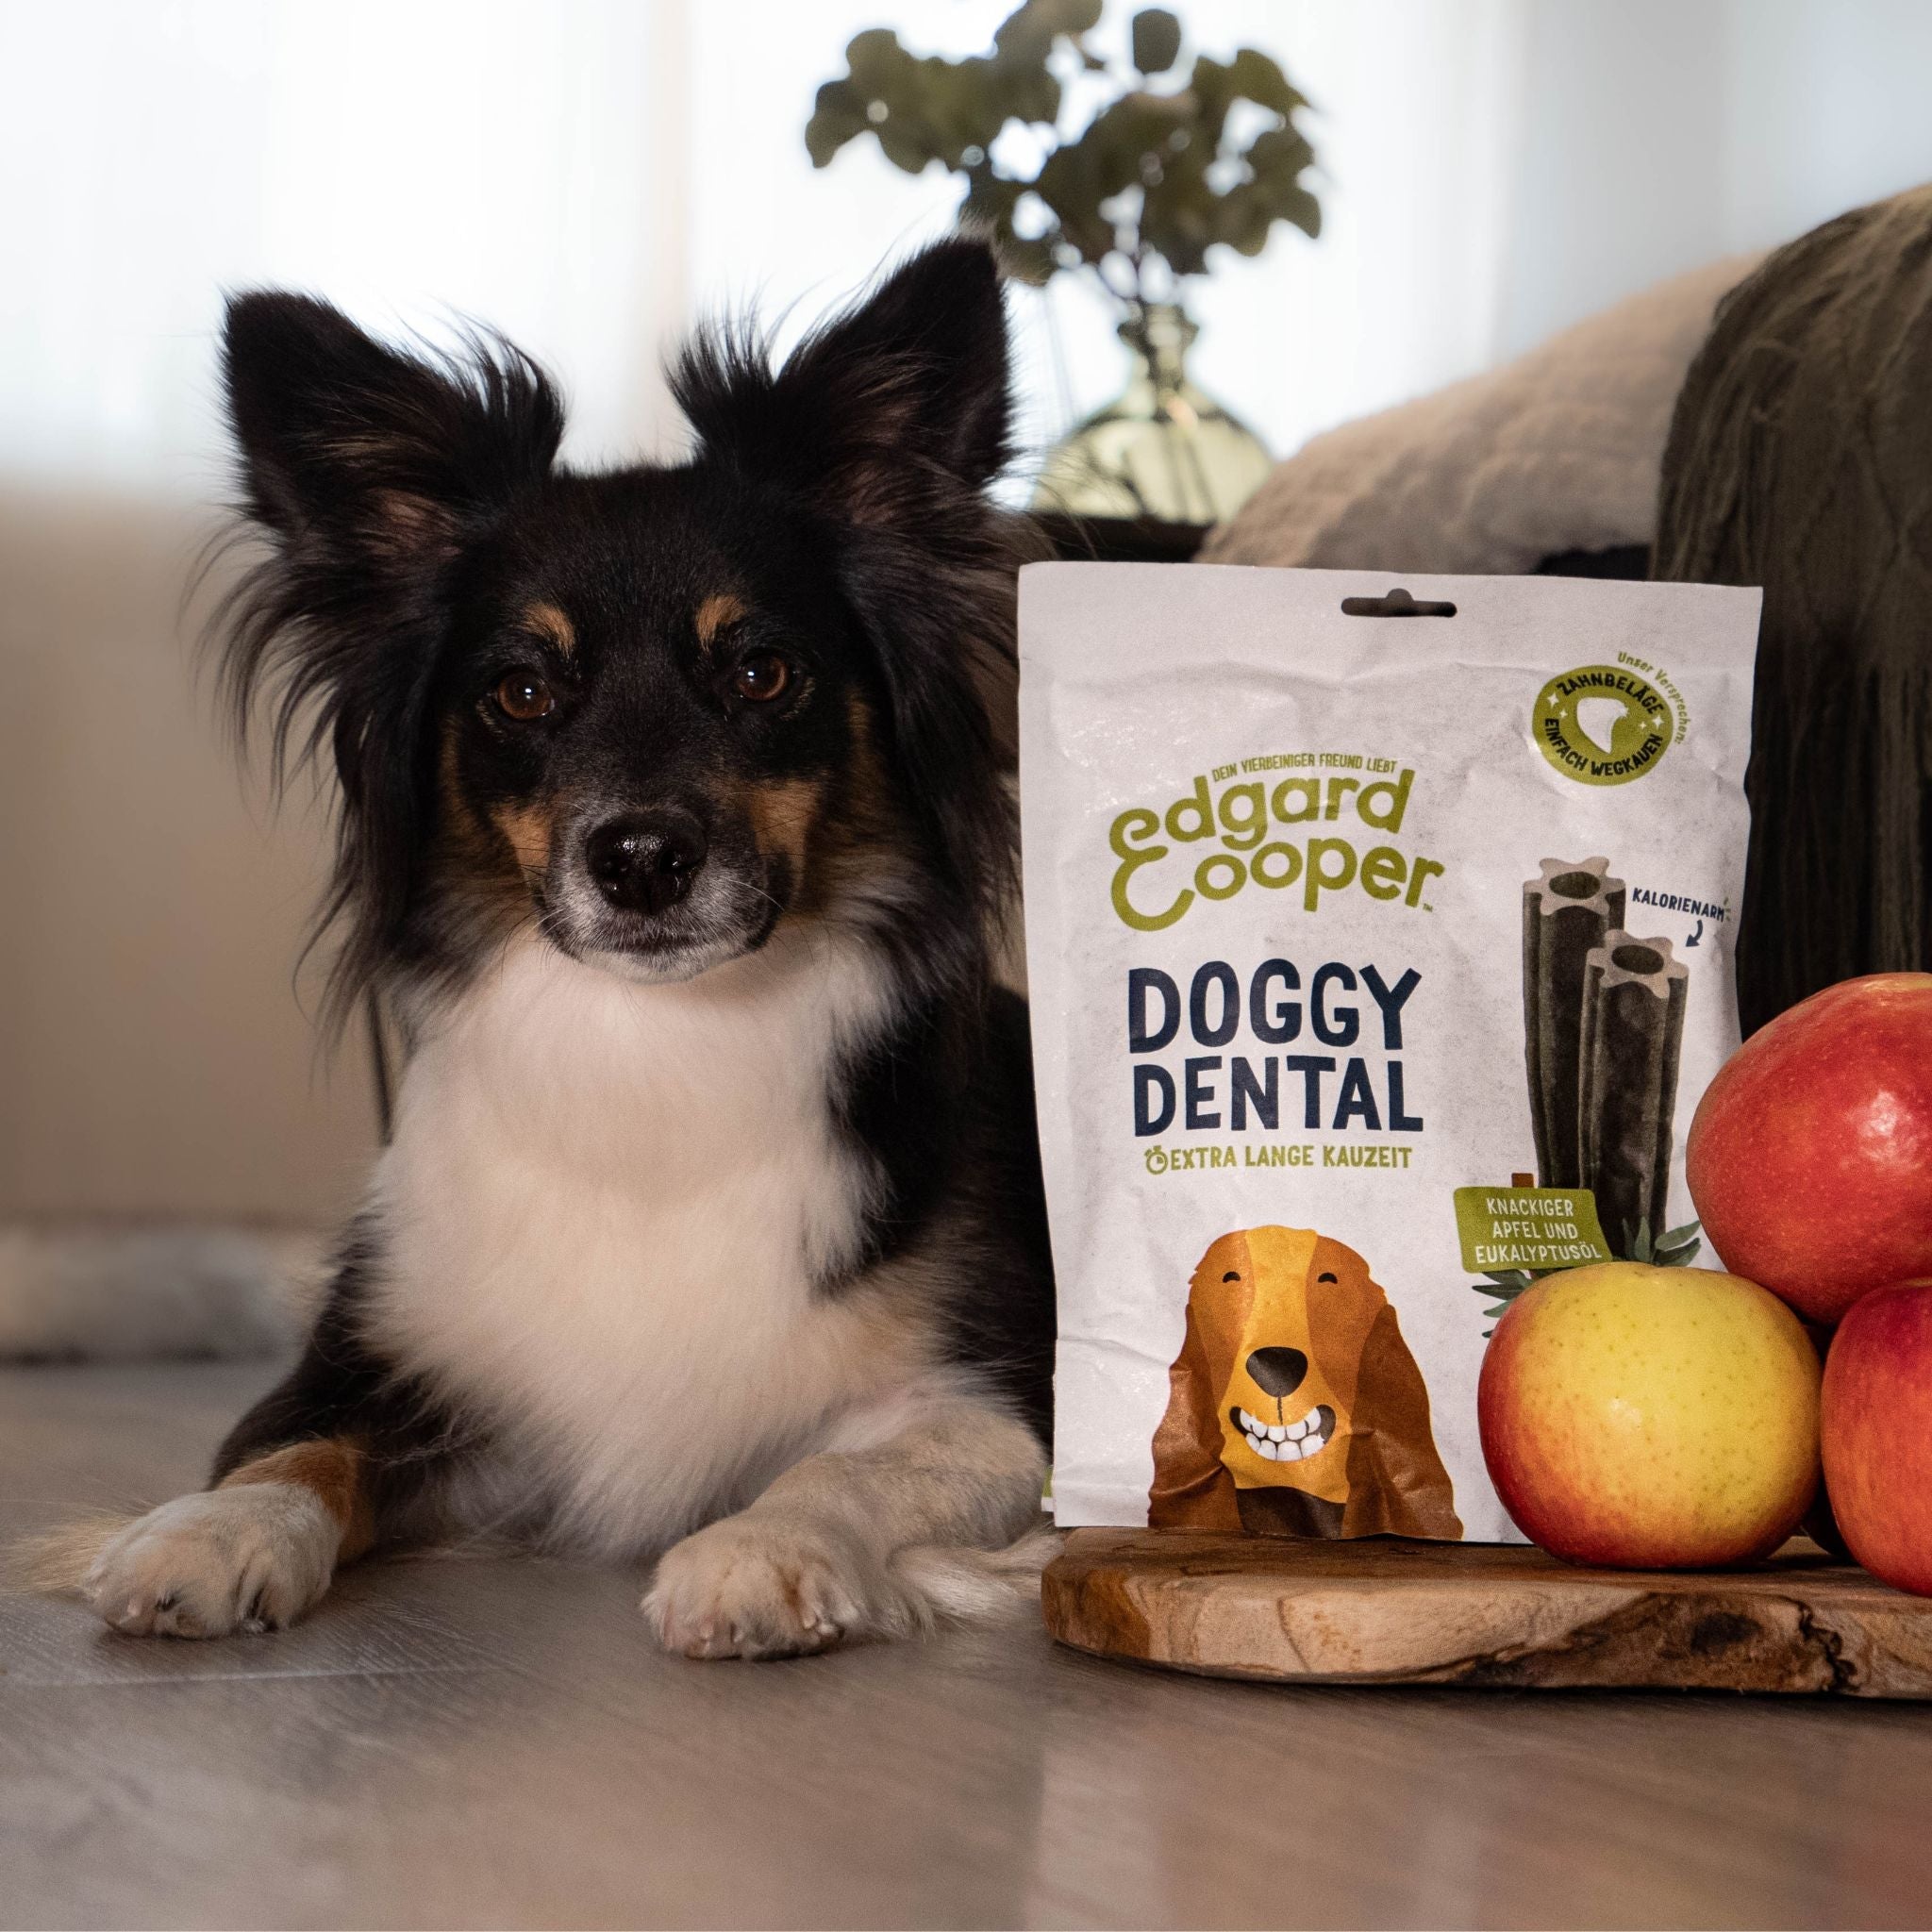 Edgard & Cooper Doggy Dentals Medium - Kausticks mit Apfel & Eukalyptus (160g)